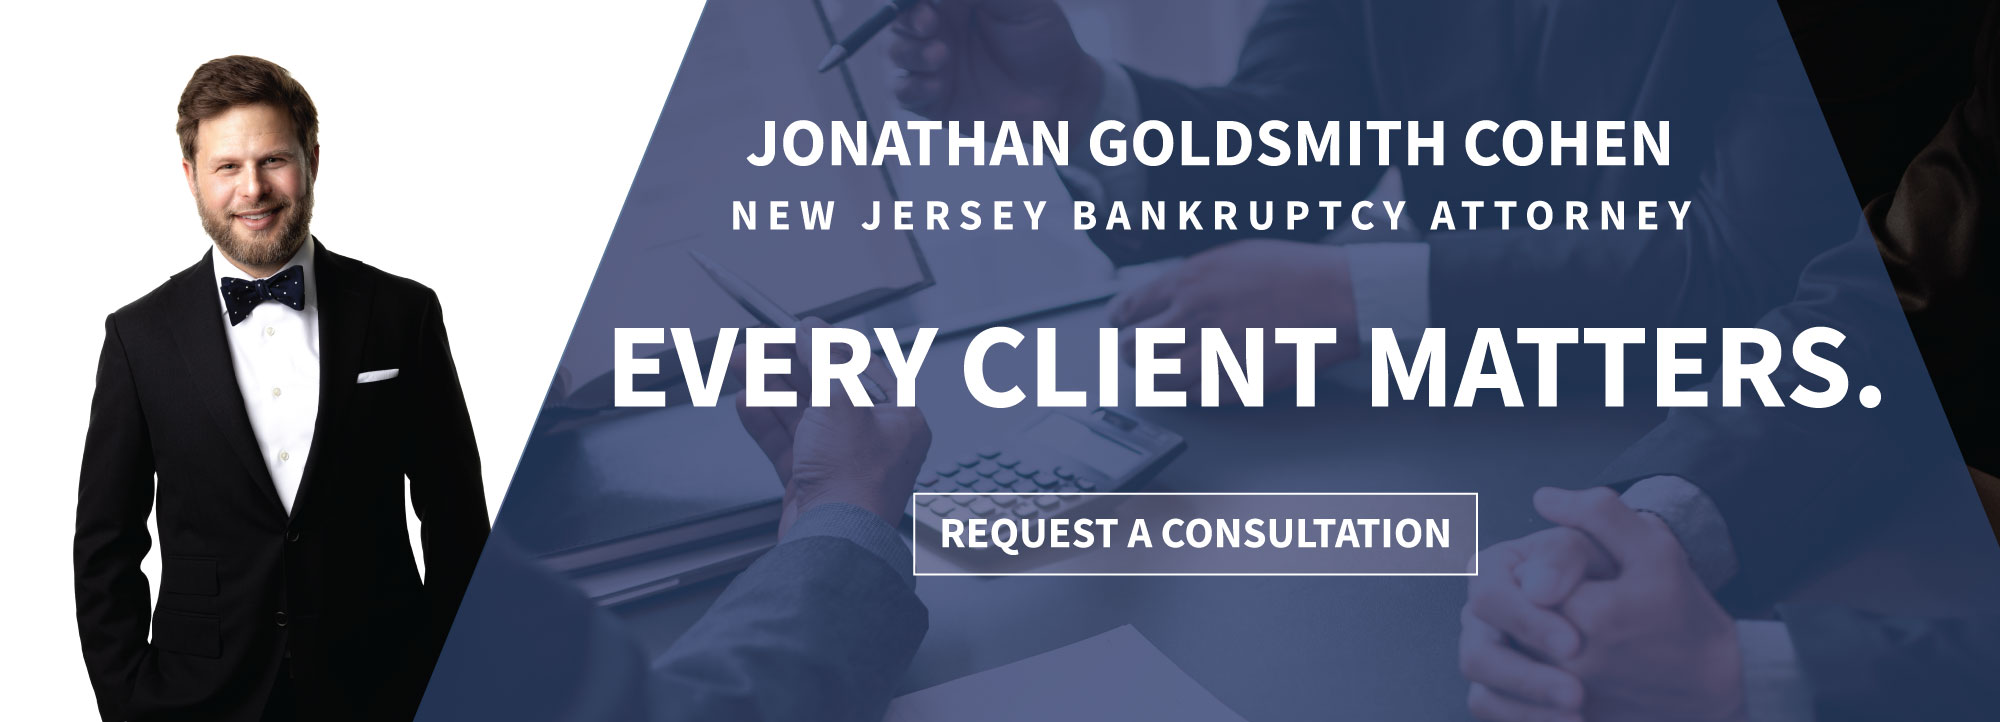 Jonathan Goldsmith Cohen Bankruptcy Attorney Hero Image